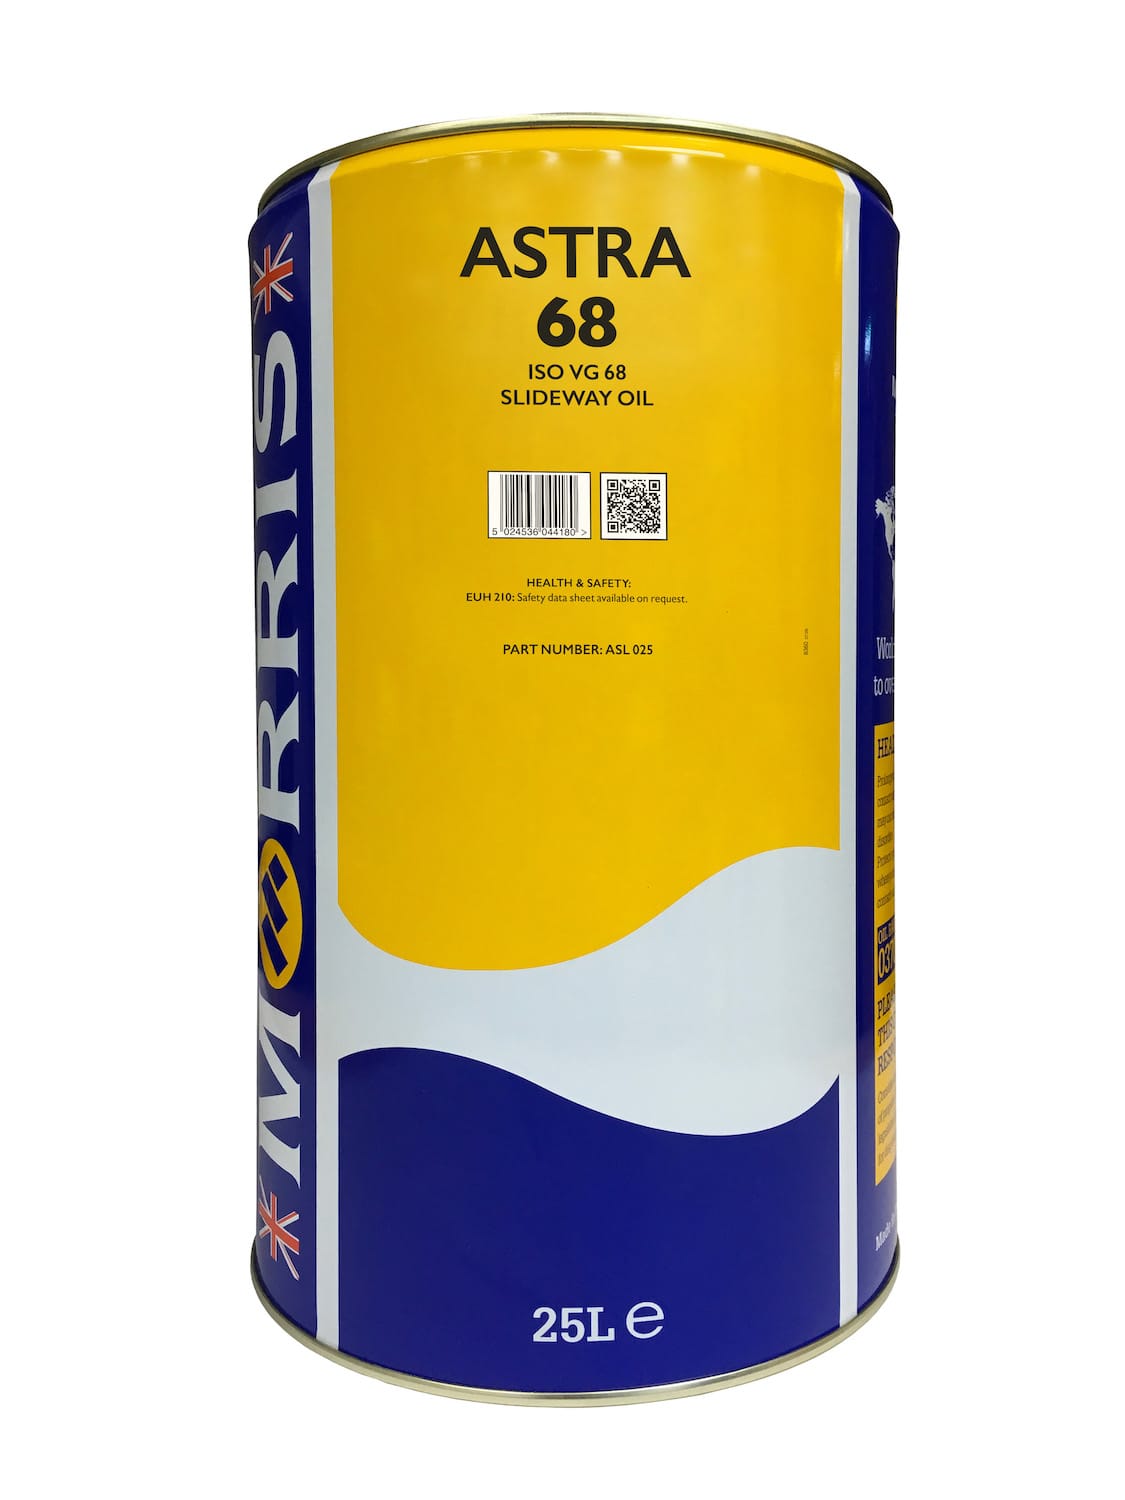 Astra 68 Slideway Oil